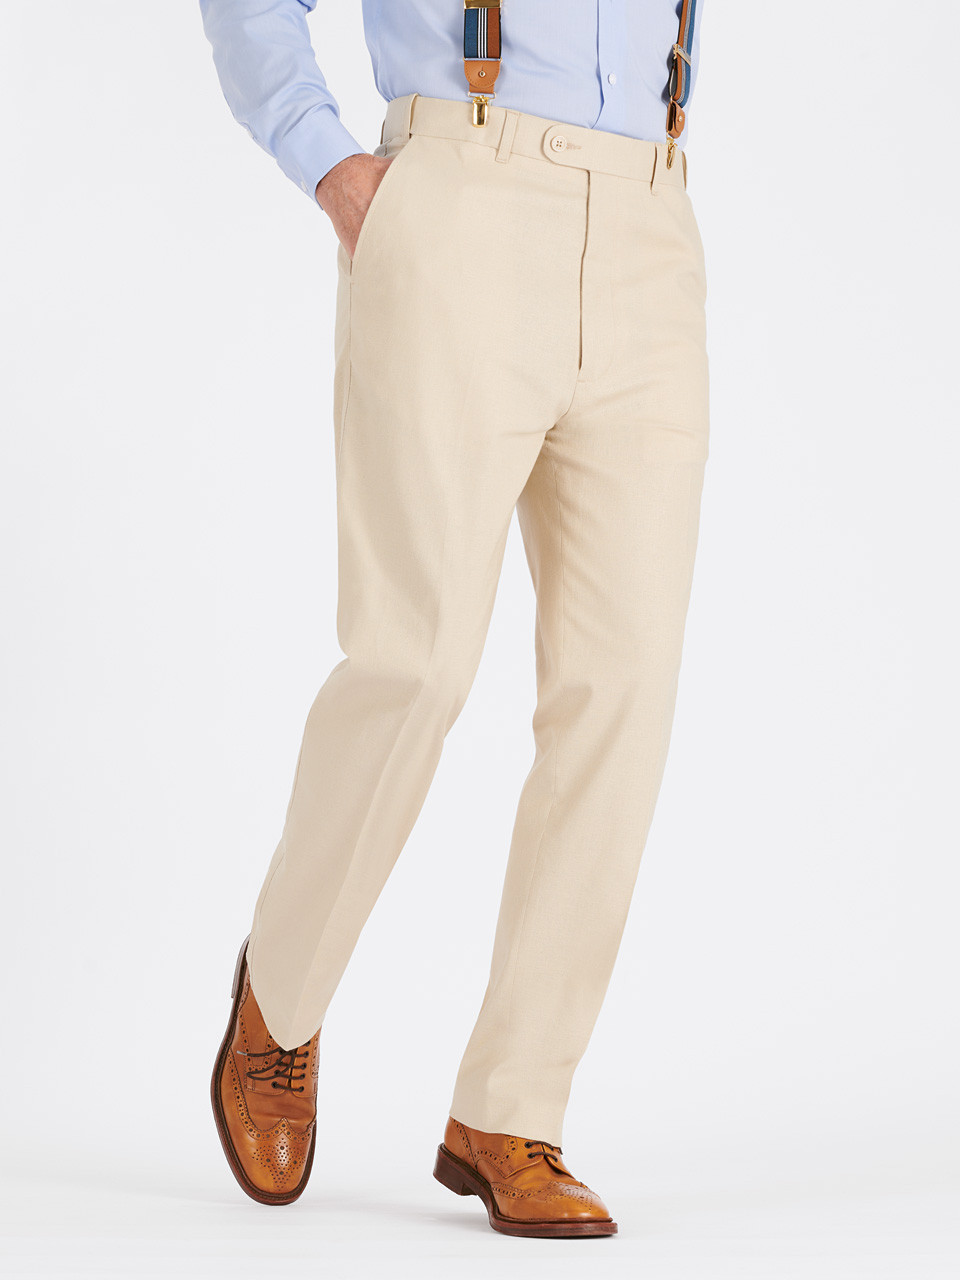 Buy Countrymade Slim Fit Pants  Cream Color Men  AJIO LUXE